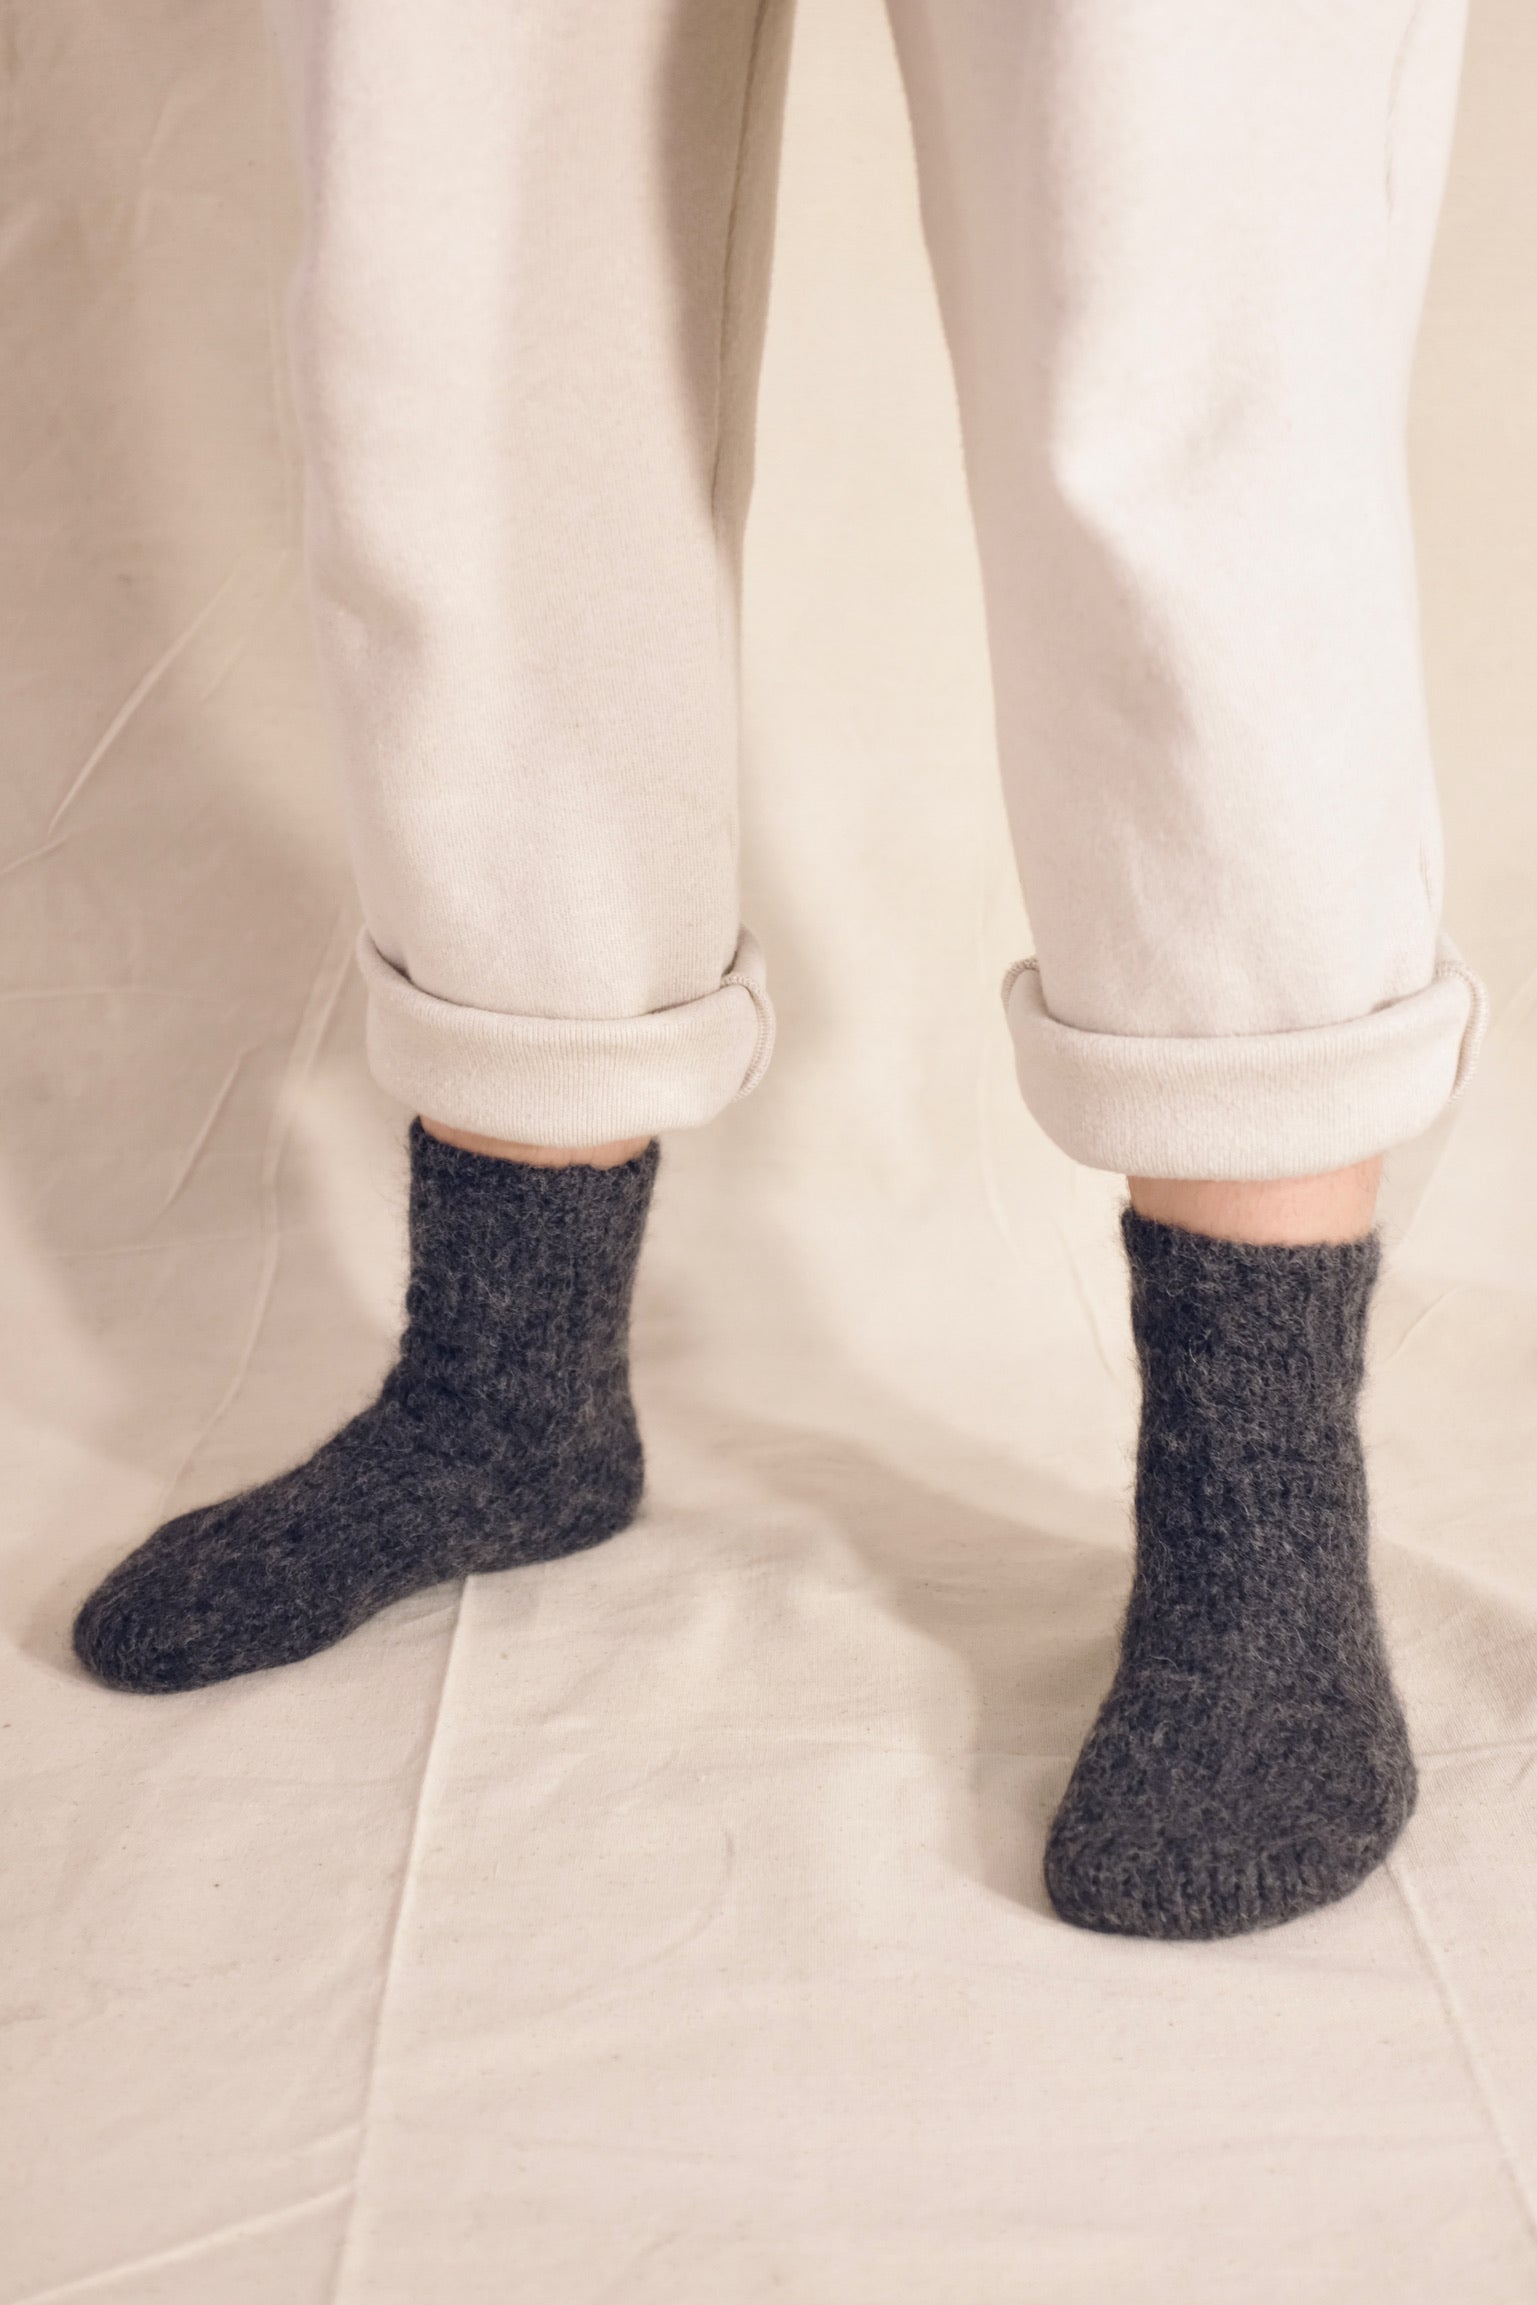 Bare Knitwear House Socks / Charcoal